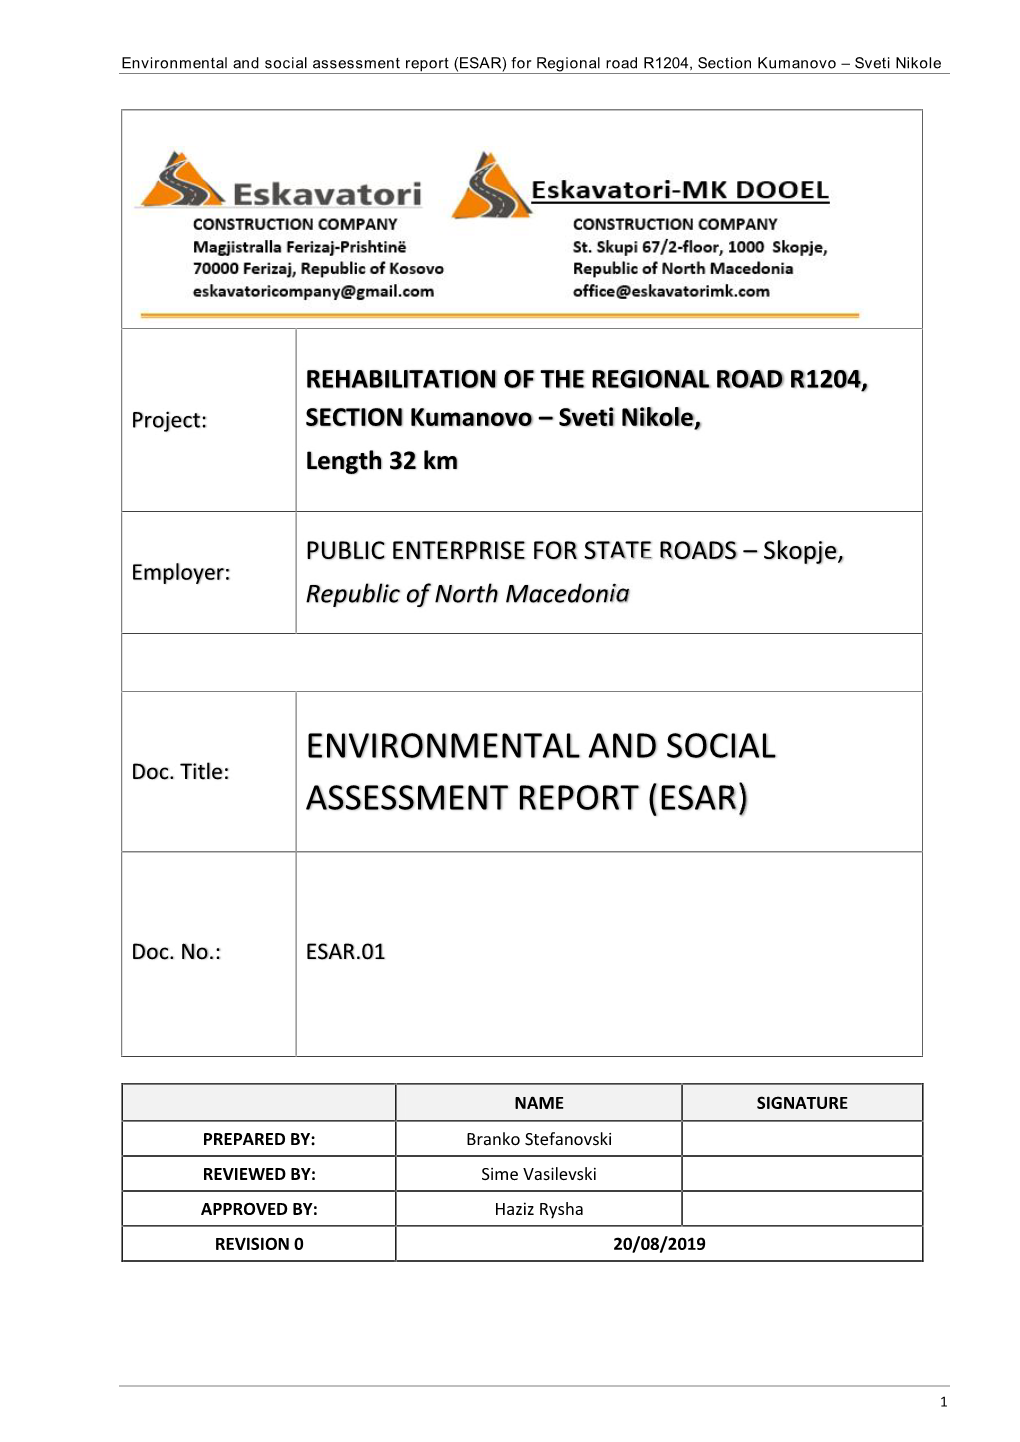 Environmental and Social Assessment Report (ESAR) for Regional Road R1204, Section Kumanovo – Sveti Nikole